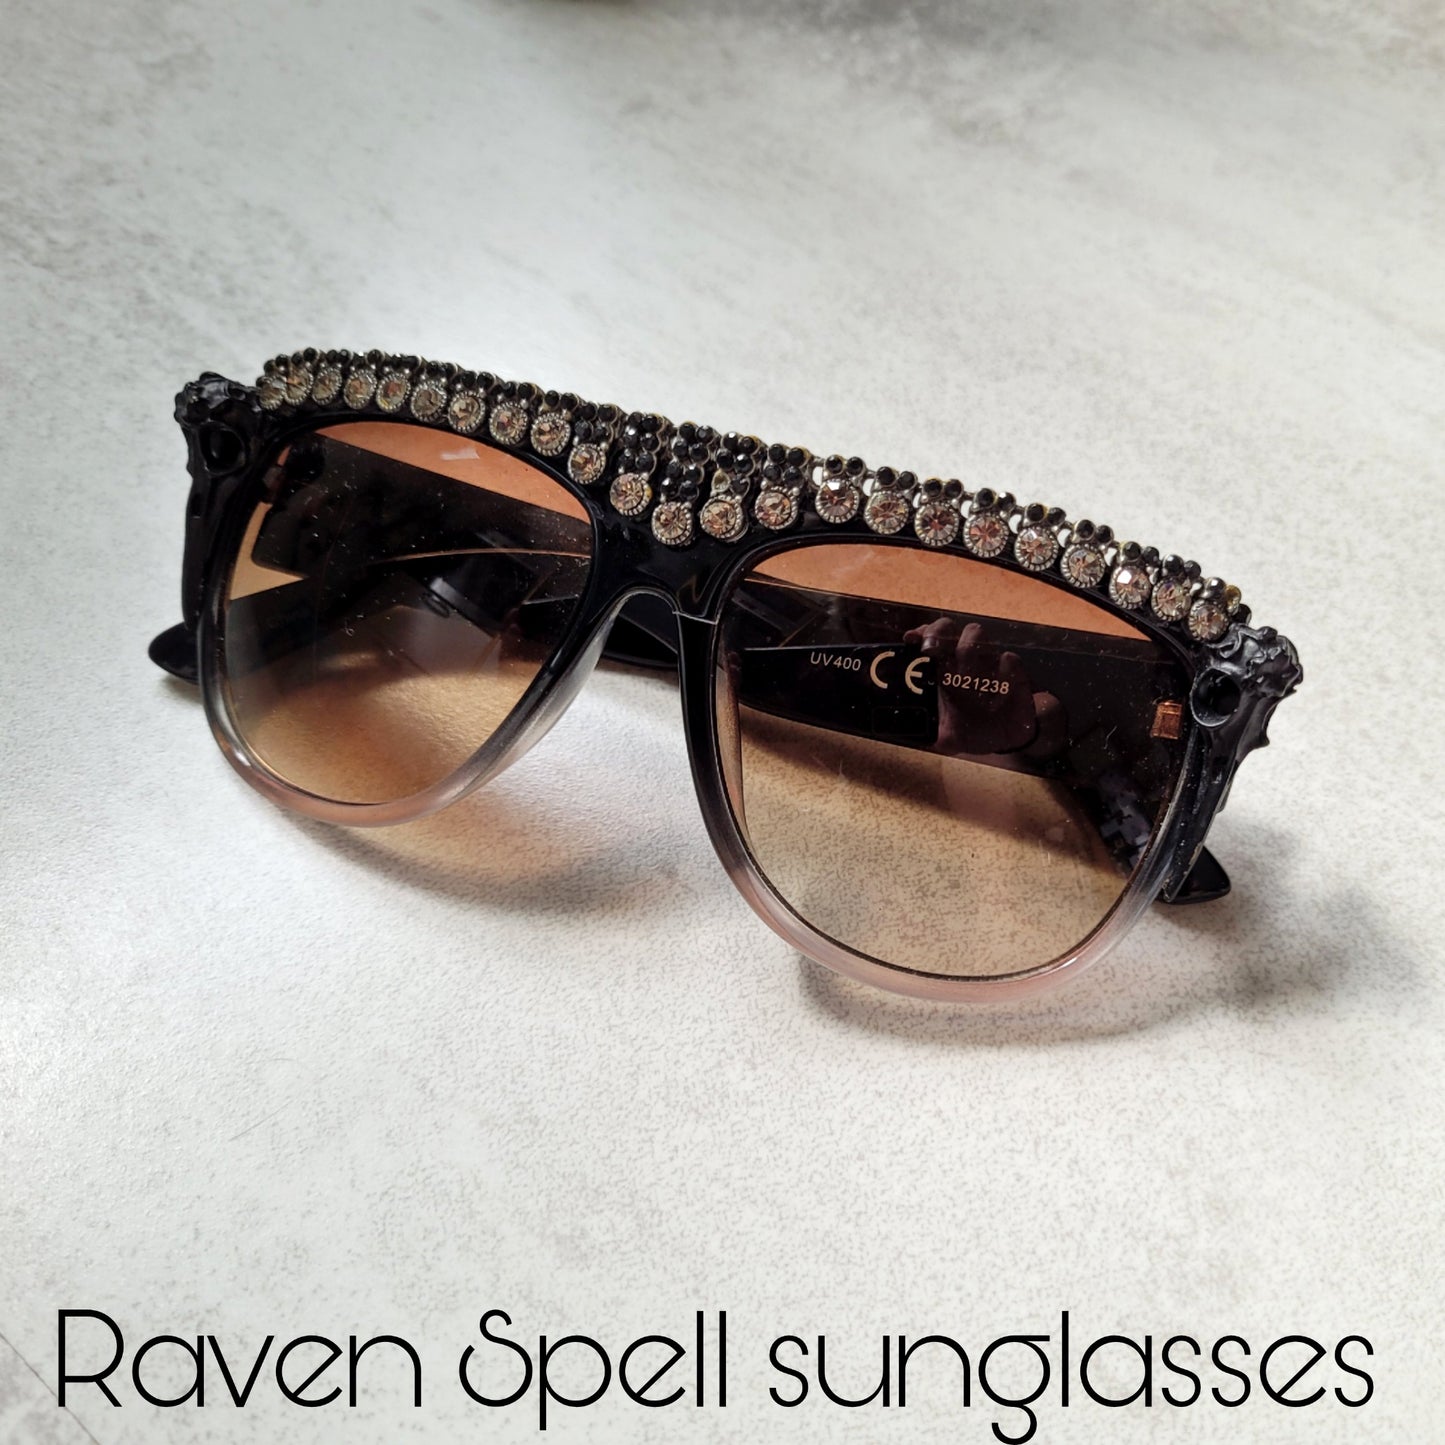 Midnight Garden Collection: The Raven Spell Sunglasses